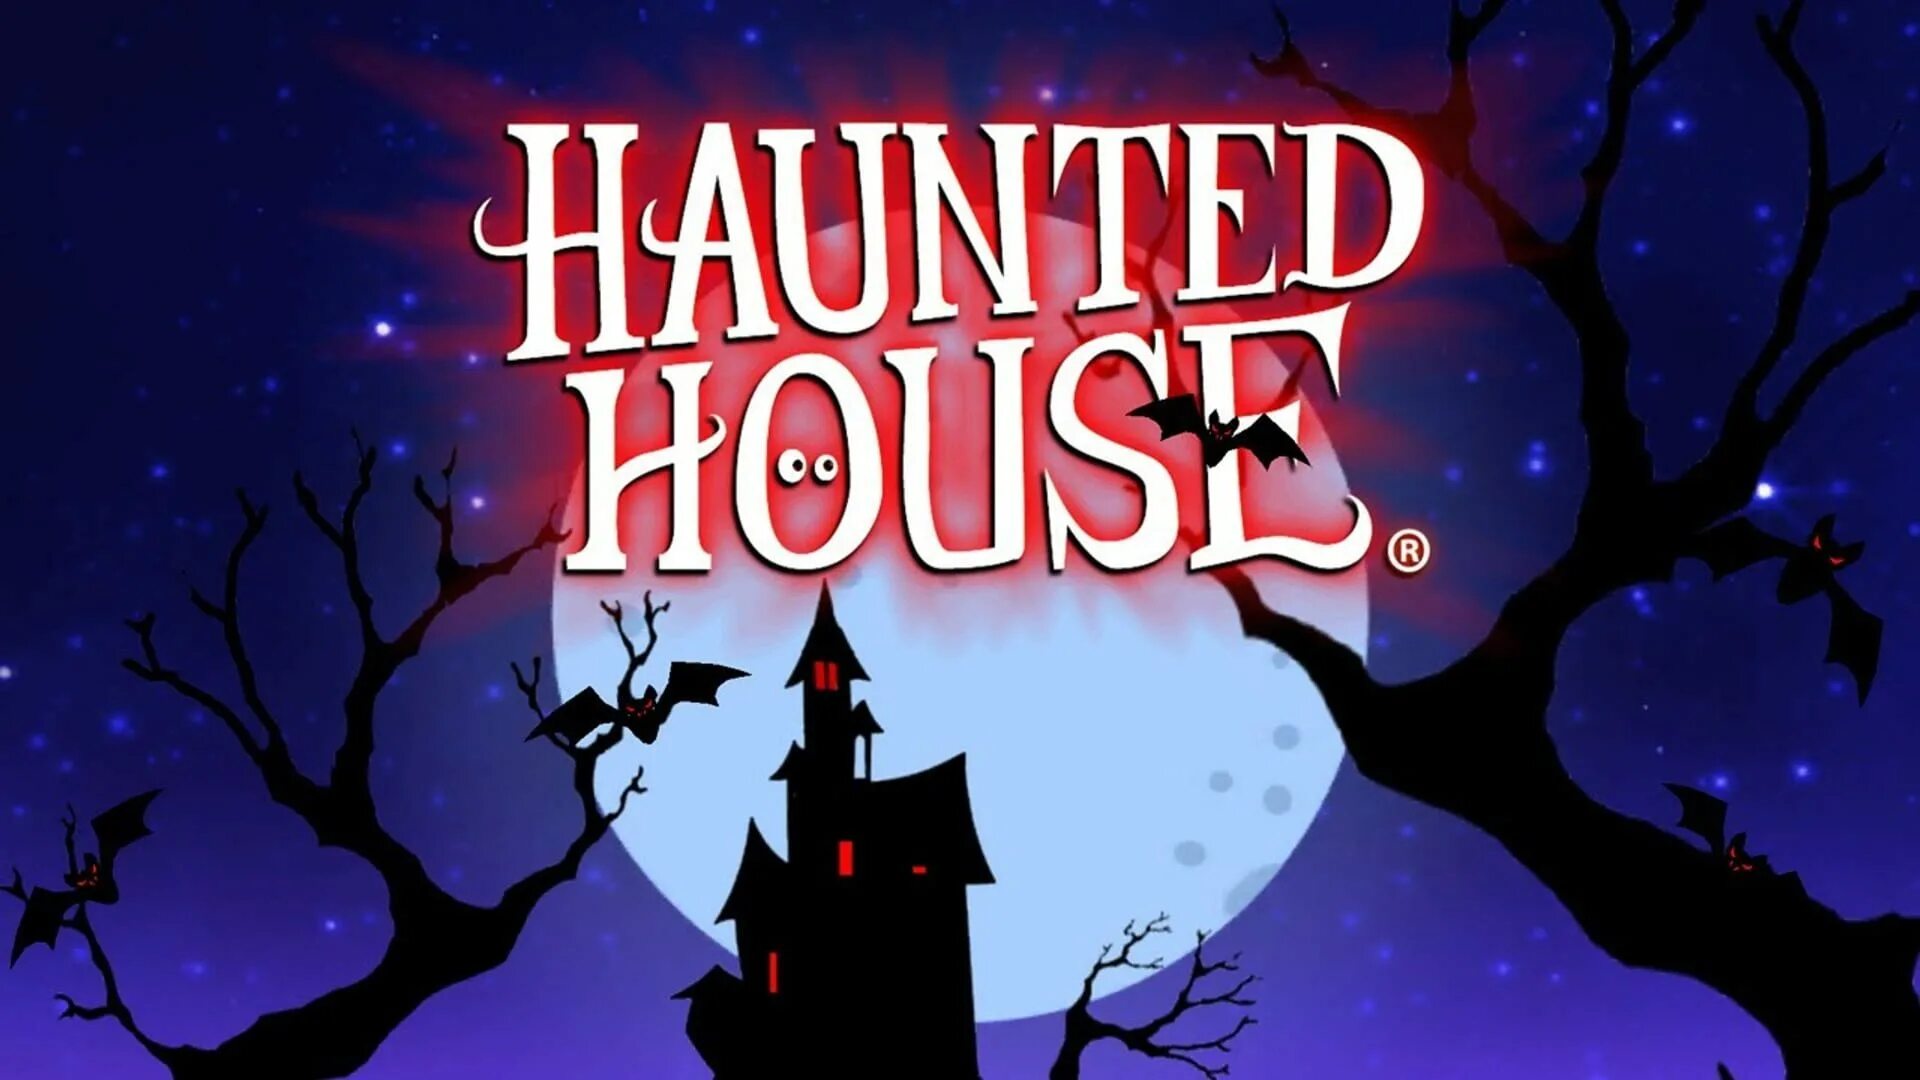 52 и хаунтед текст. A Haunted House. Haunted House игра. «Haunted House» 1991 игра. Haunted House игра 1981.